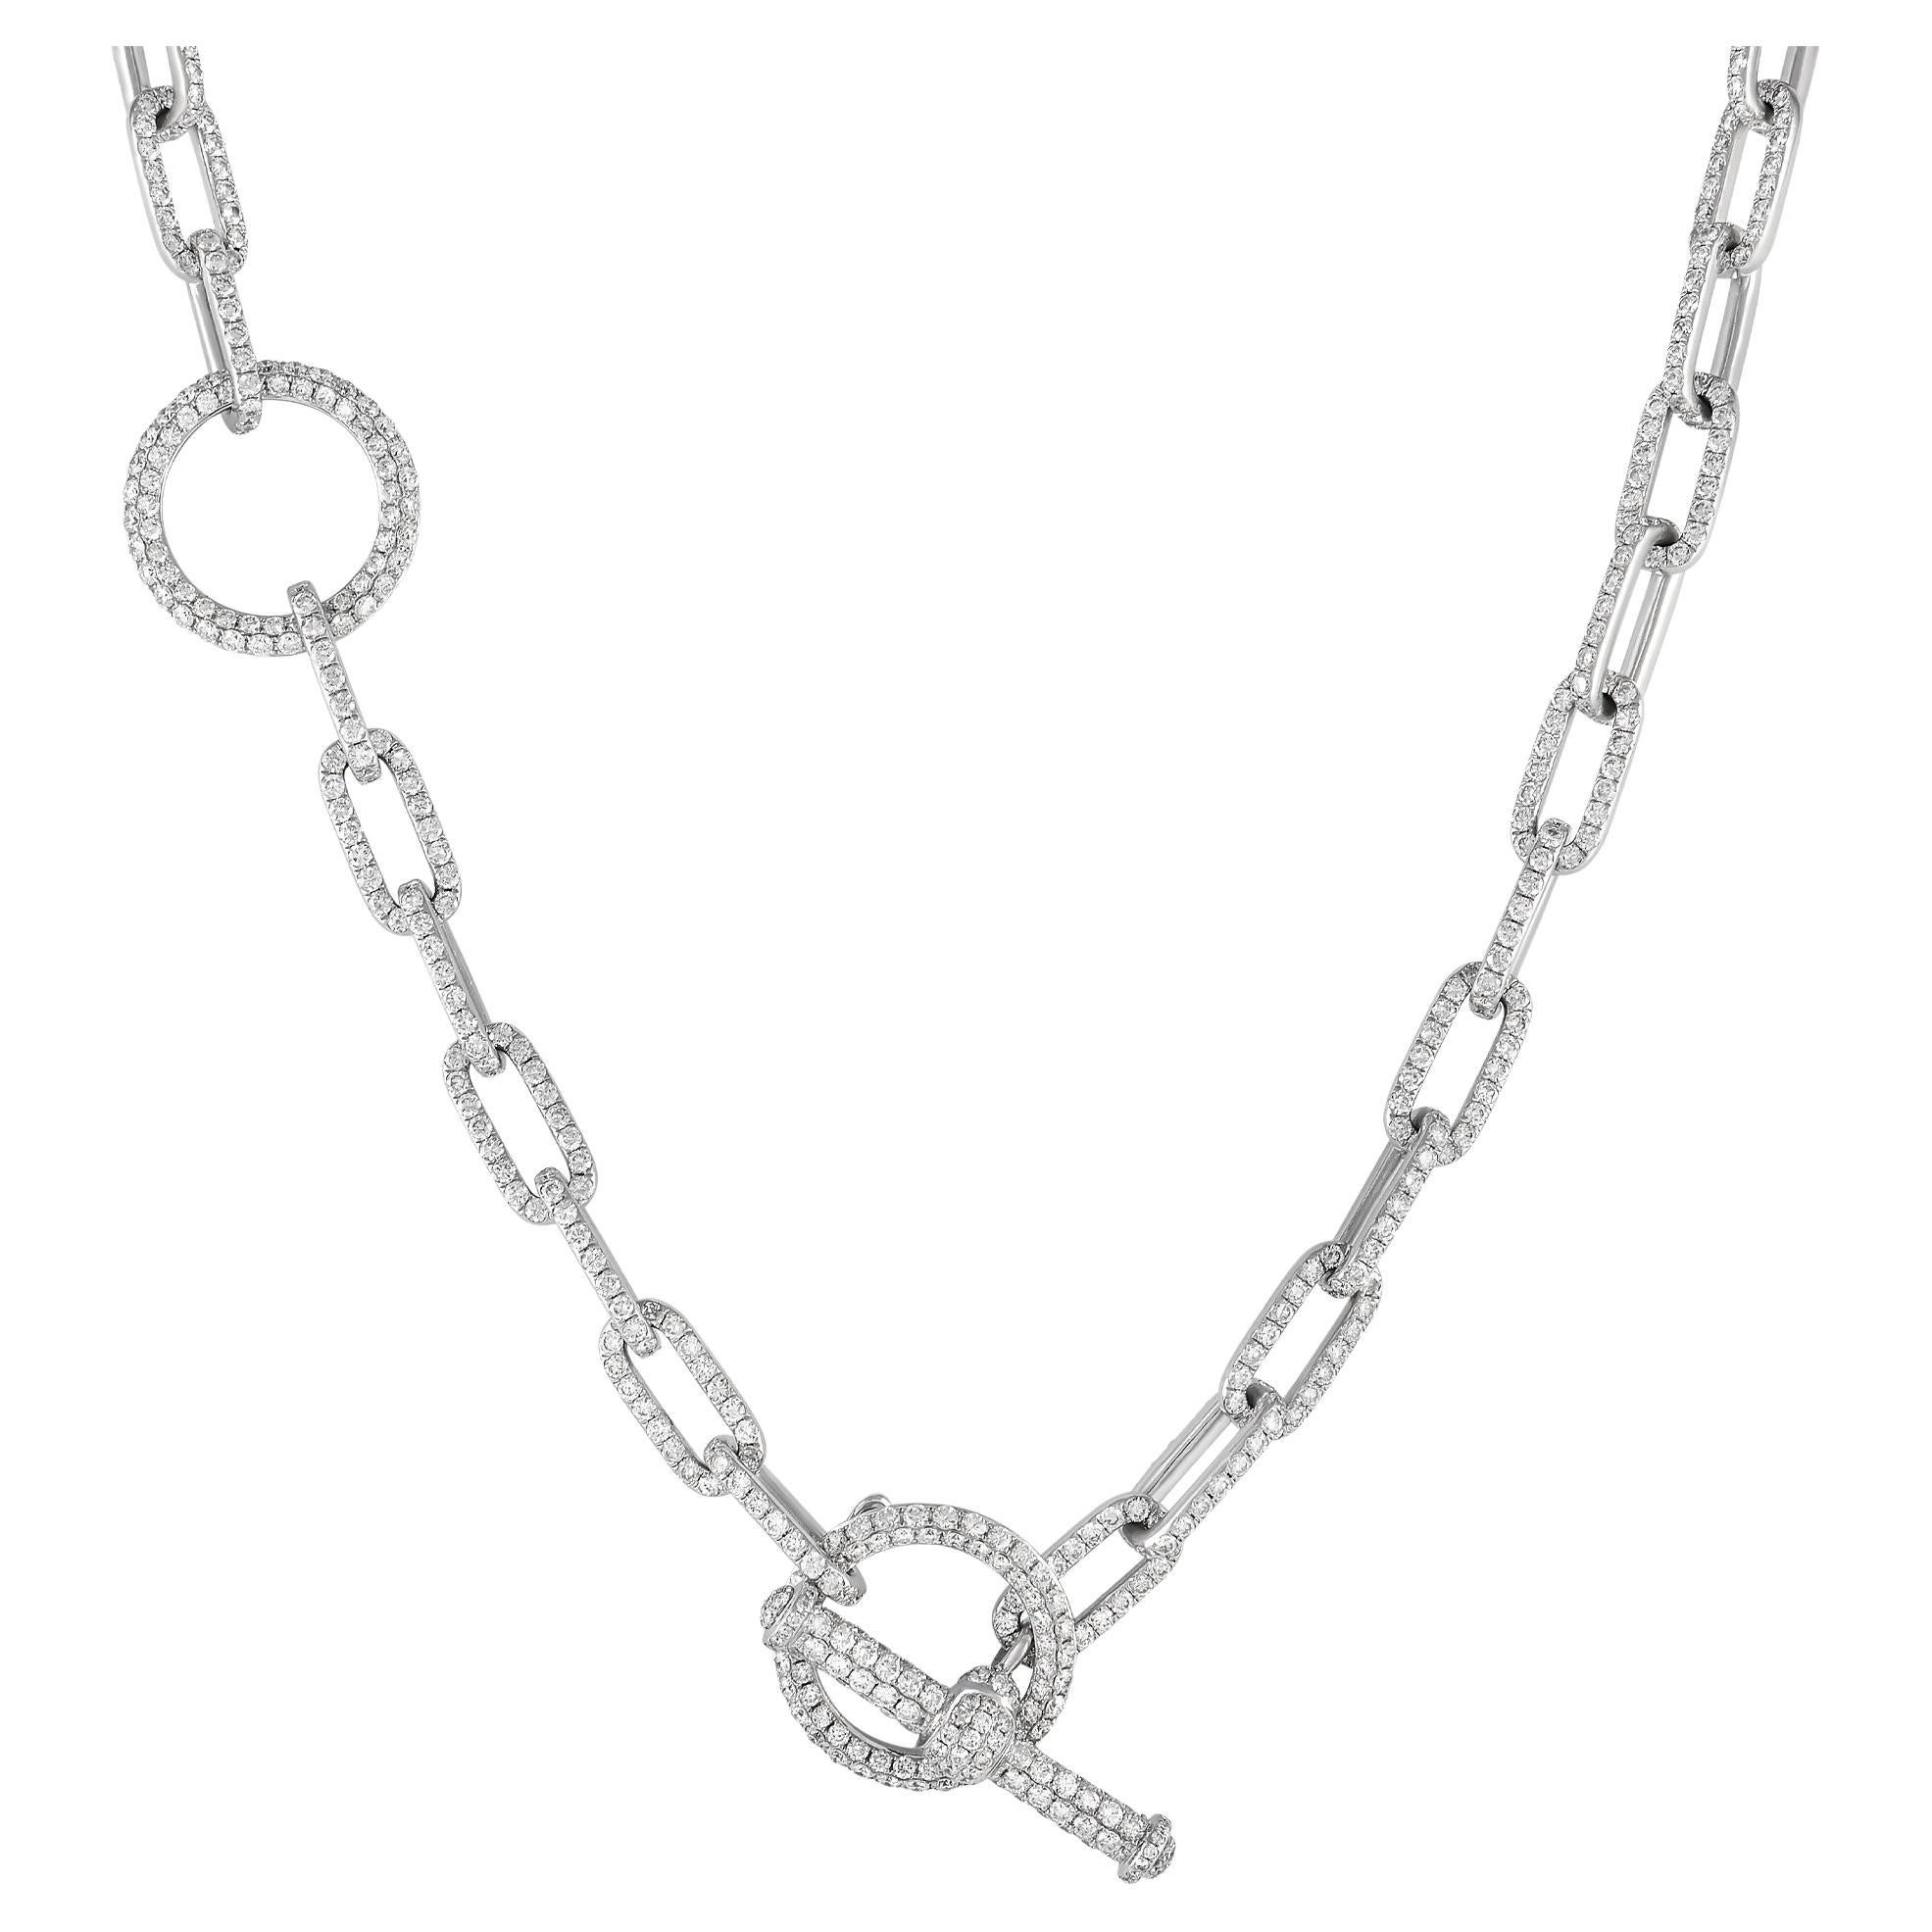 LB Exclusive 18K White Gold 21.0ct Diamond Link Necklace